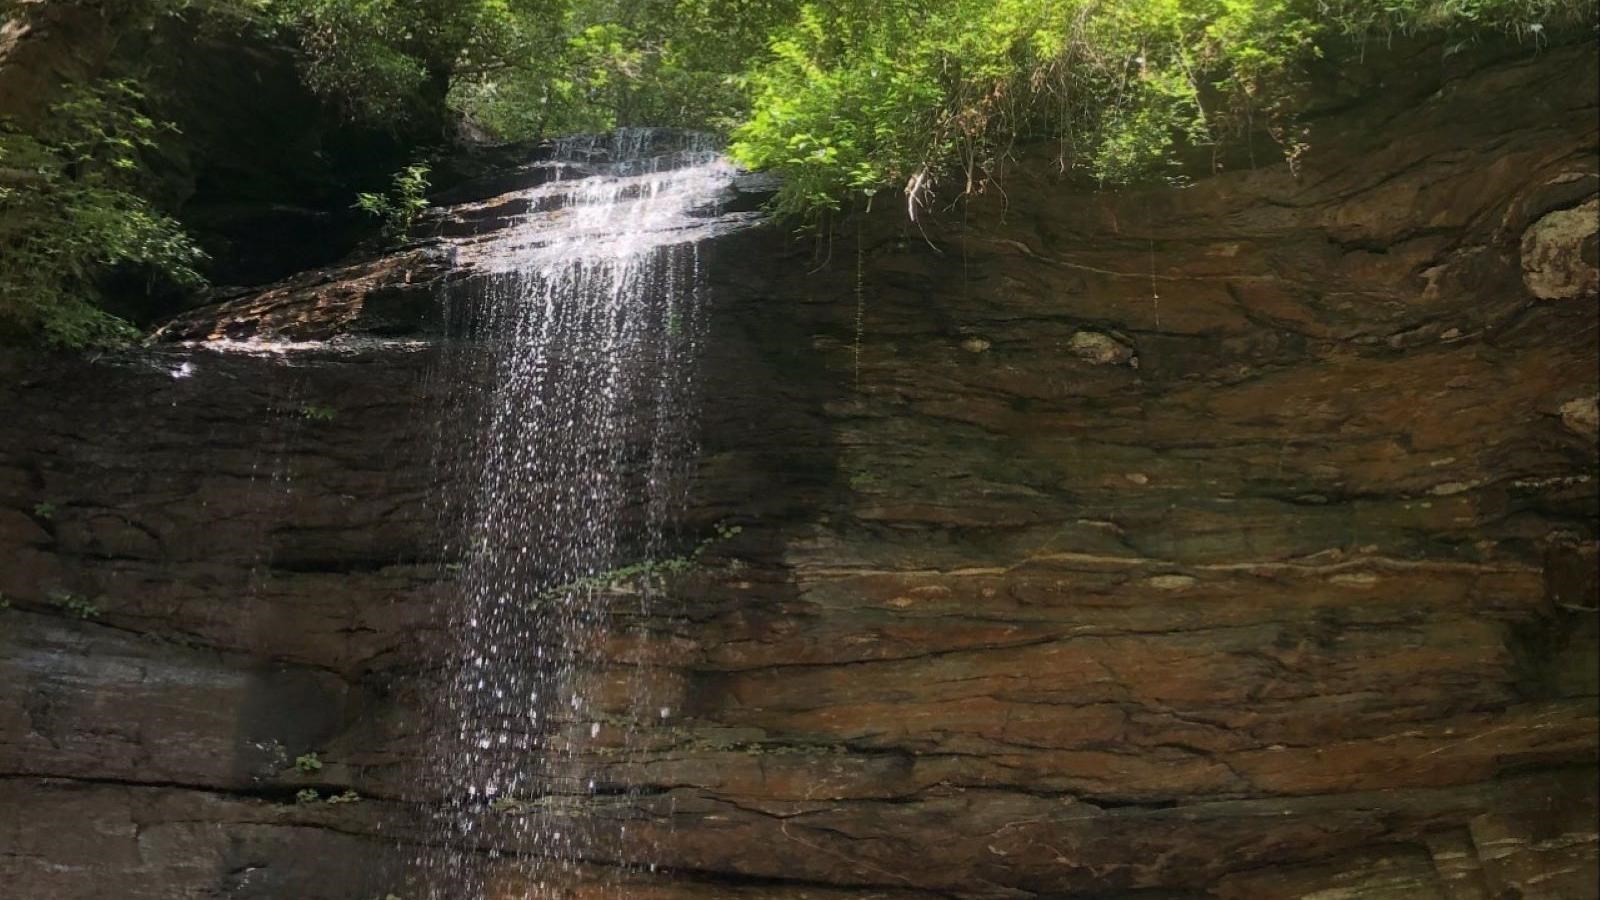 A narrow waterfall cascades over a rocky cliff edge.